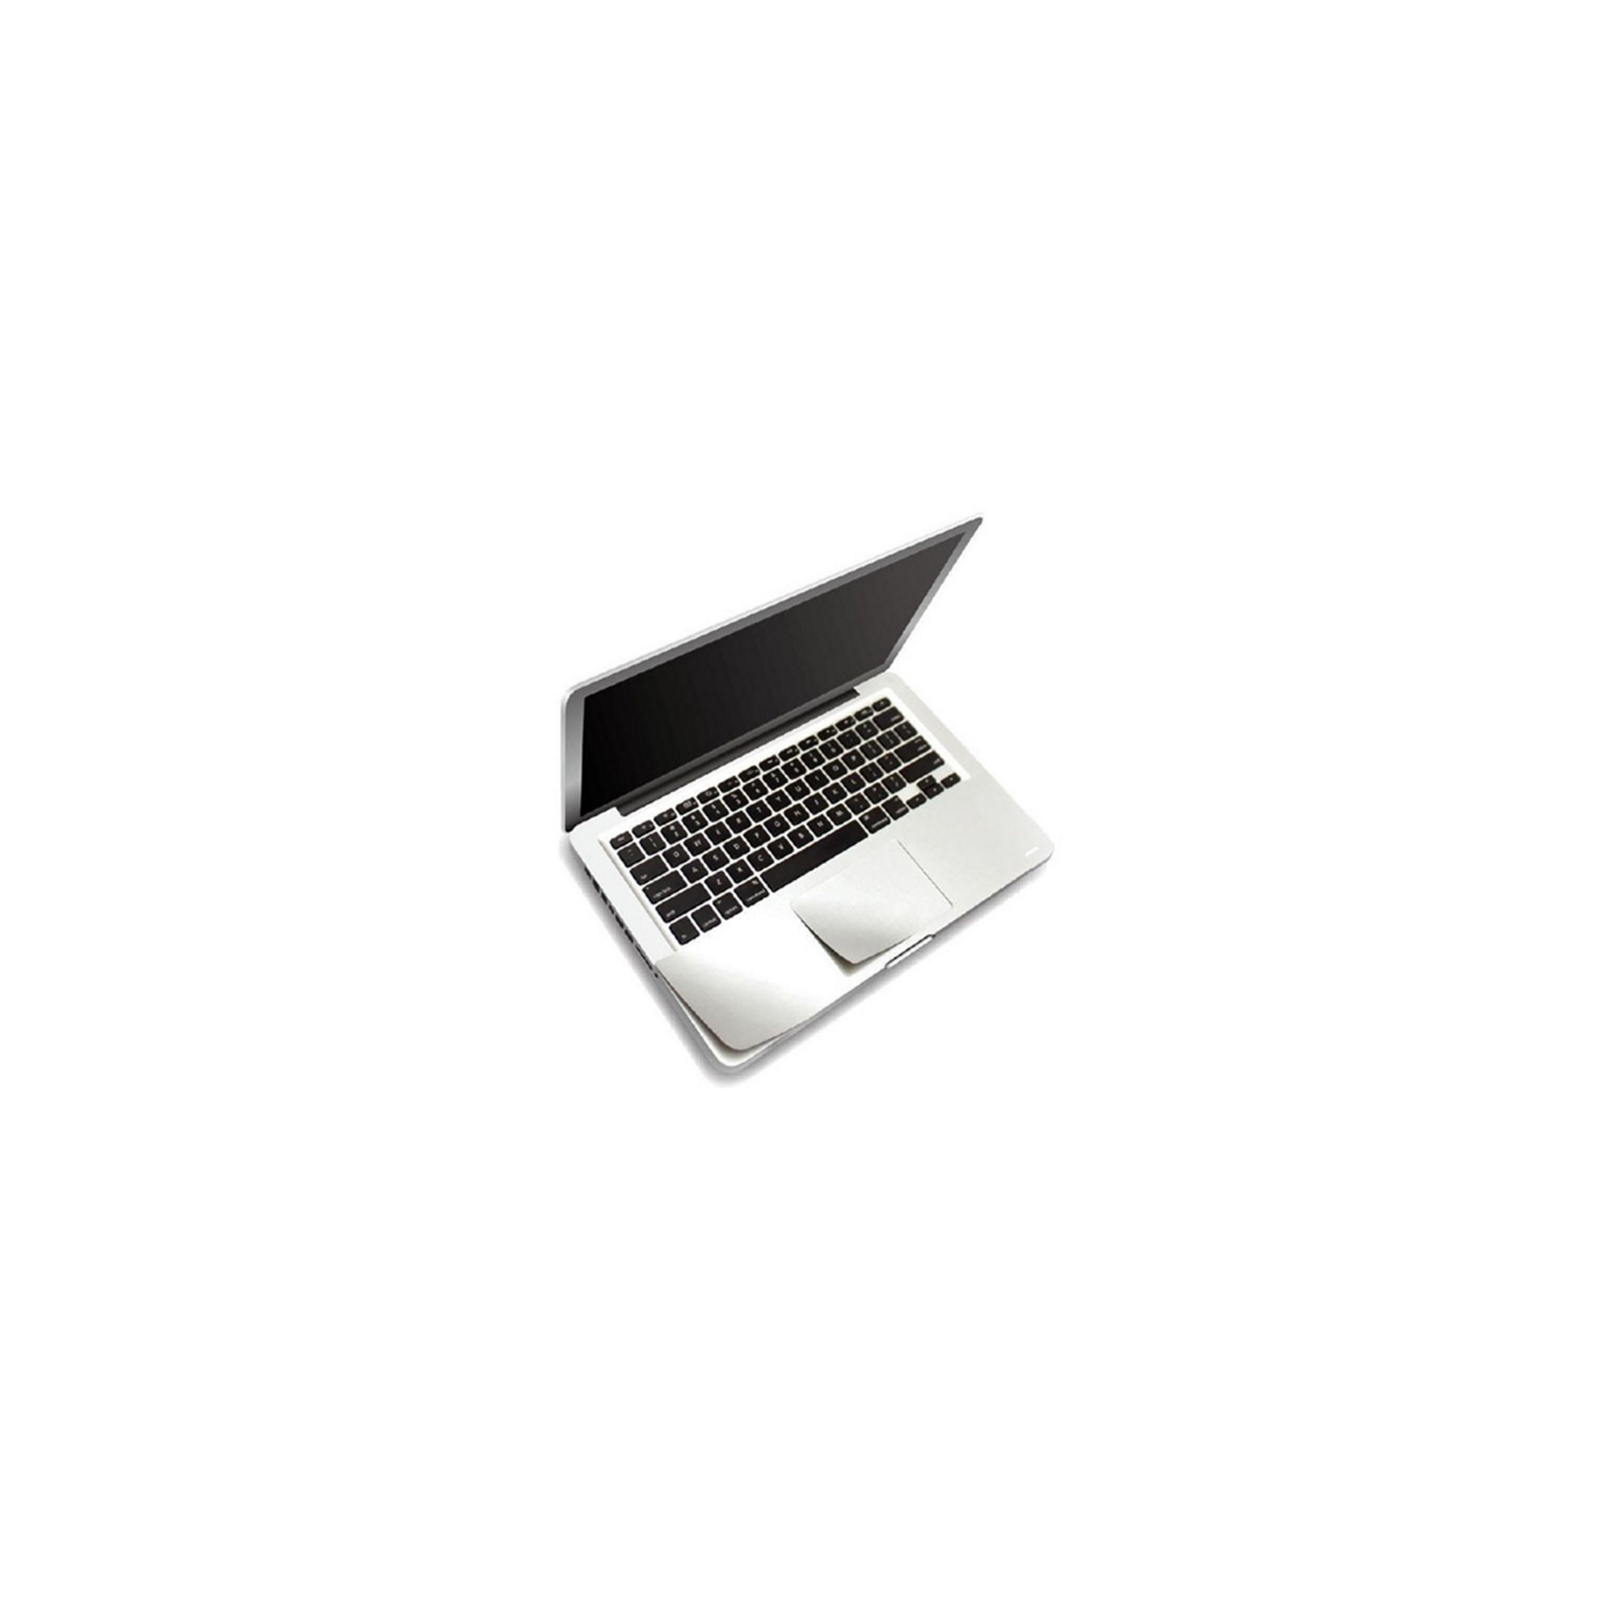 Пленка защитная JCPAL WristGuard Palm Guard для MacBook Pro 15 (JCP2015) изображение 3